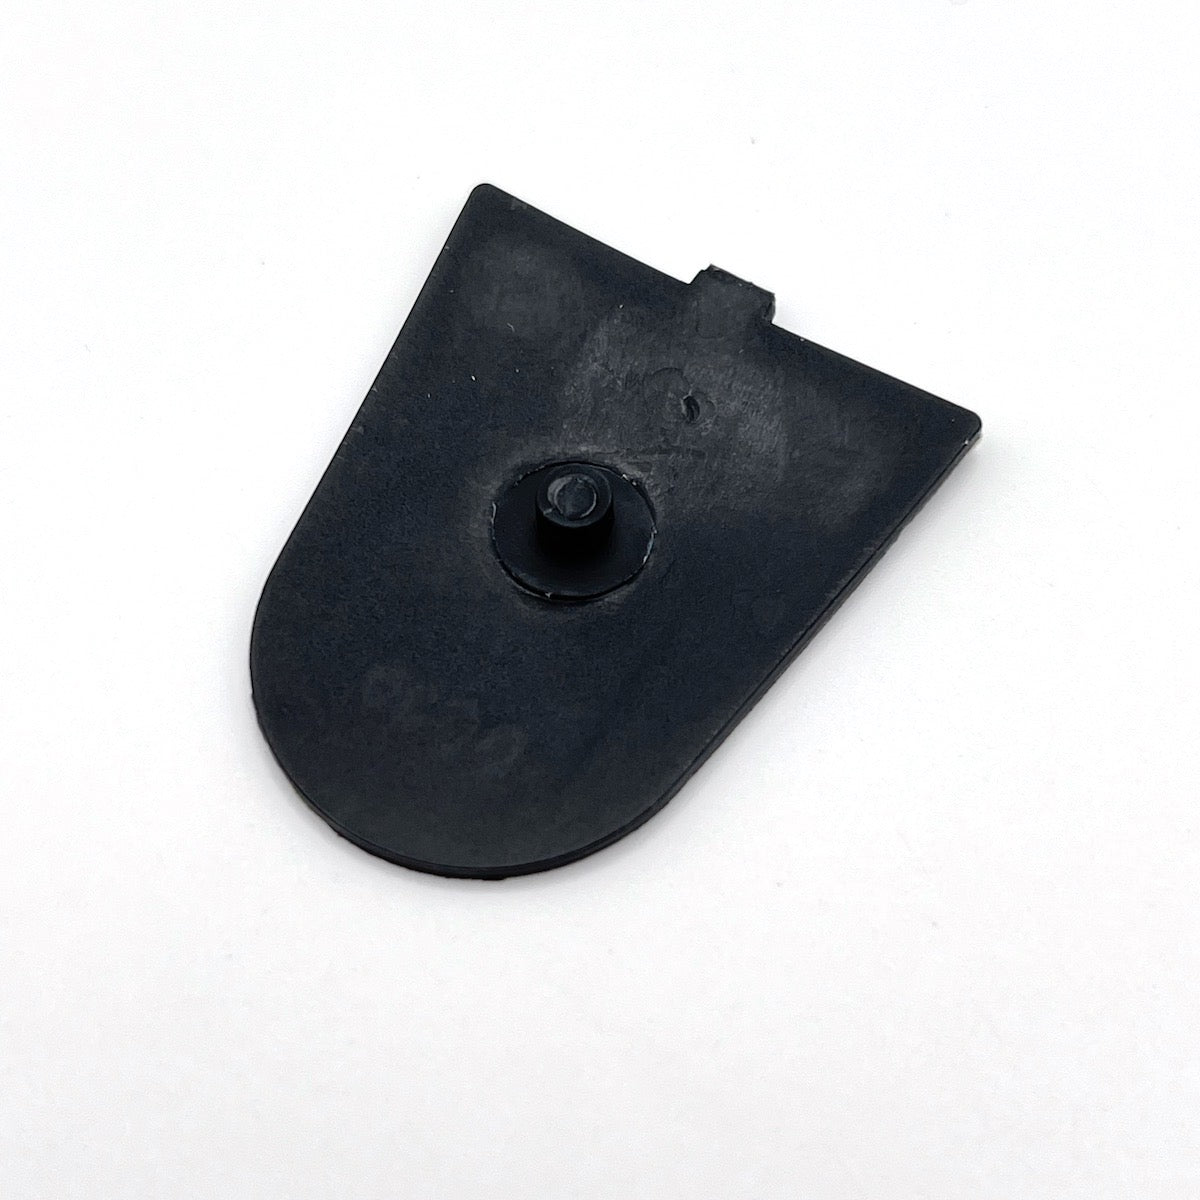 New Rubber power button for collar Garmin DC 30 repacement part repair case